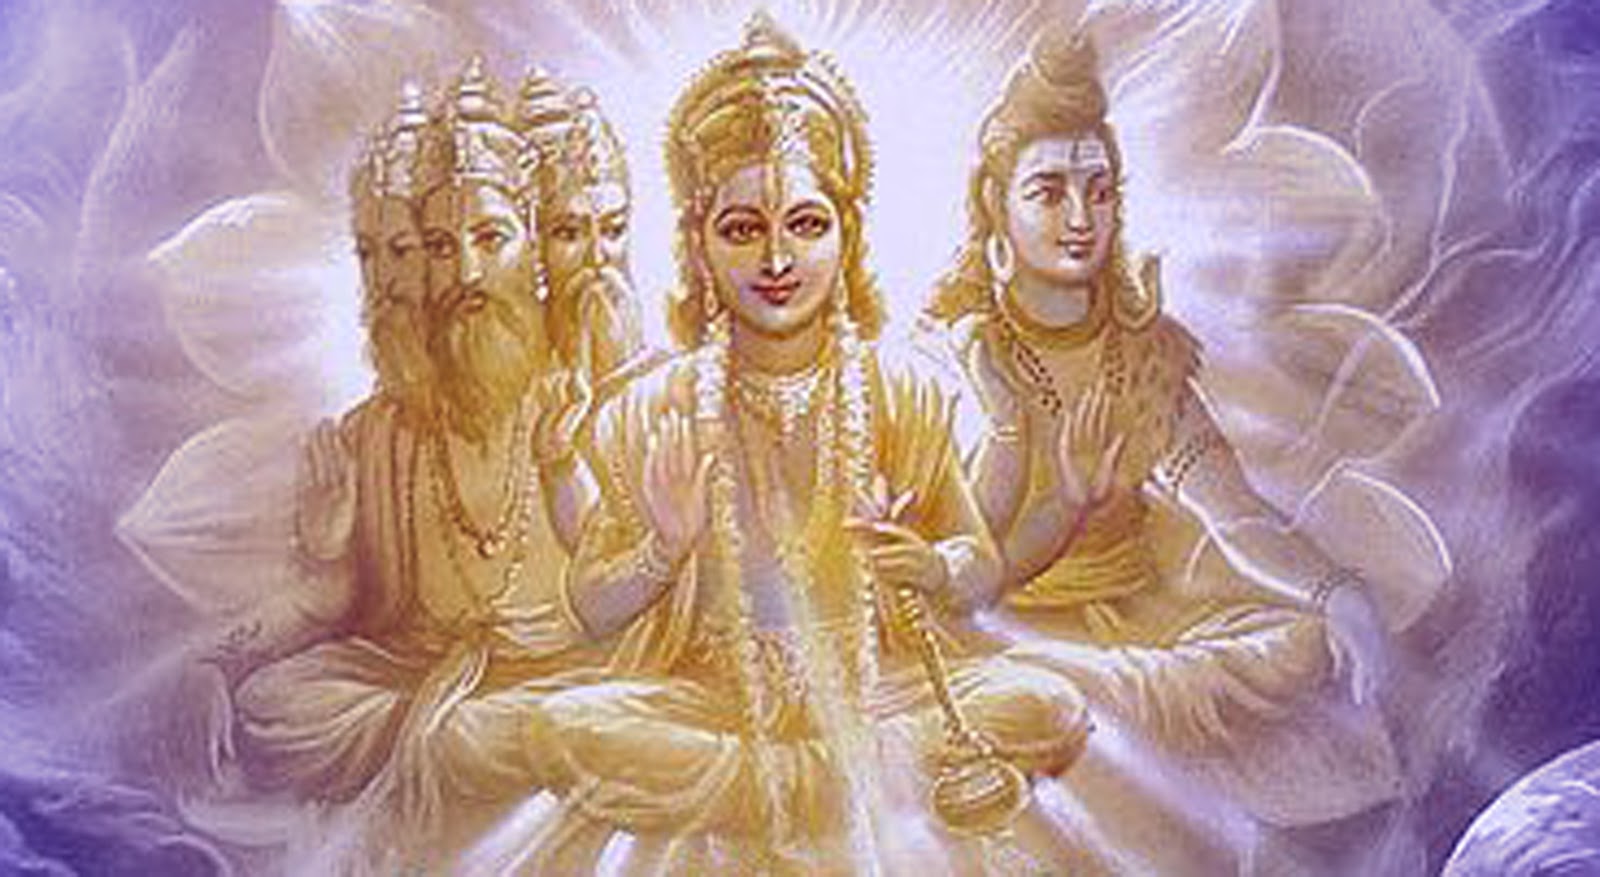 Significance of Brahma, Vishnu and Shiva in Hinduism - Chants For Meditation